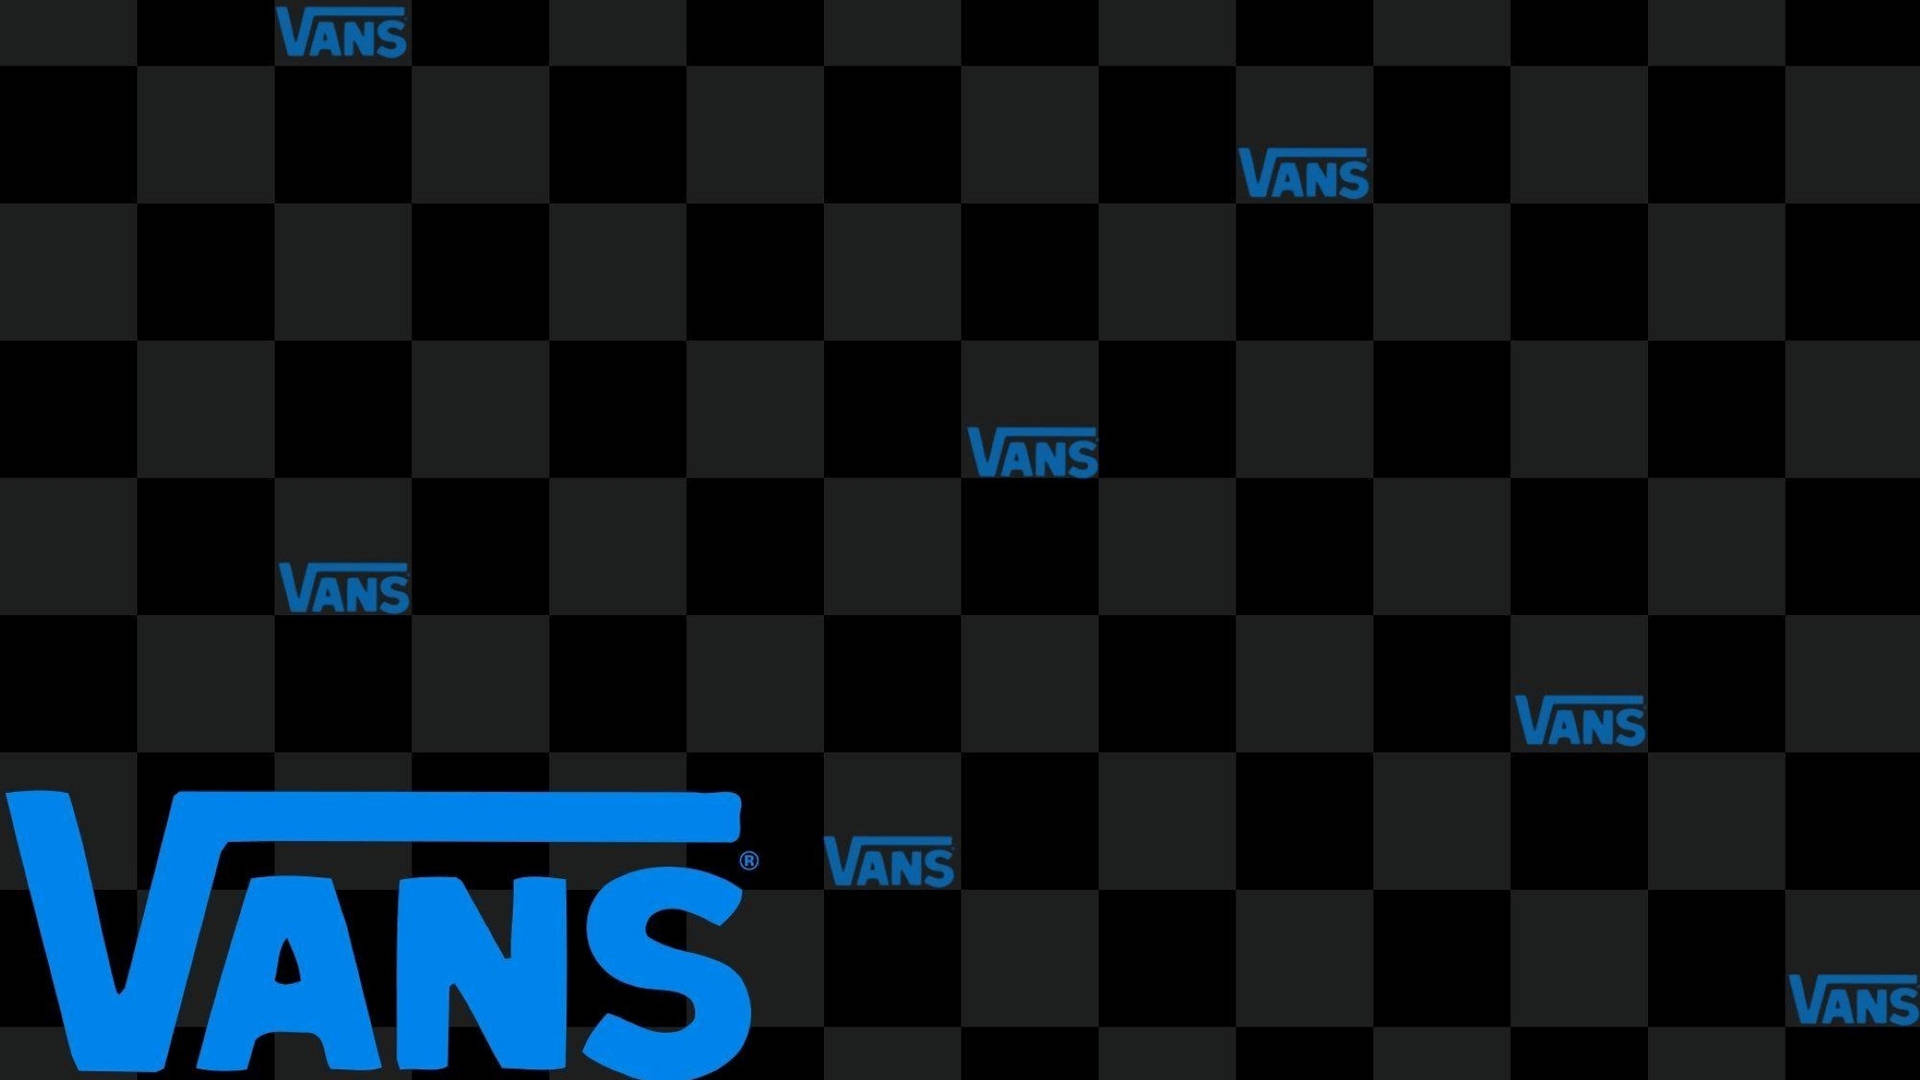 Vans Logo Black And Blue Checkered Background